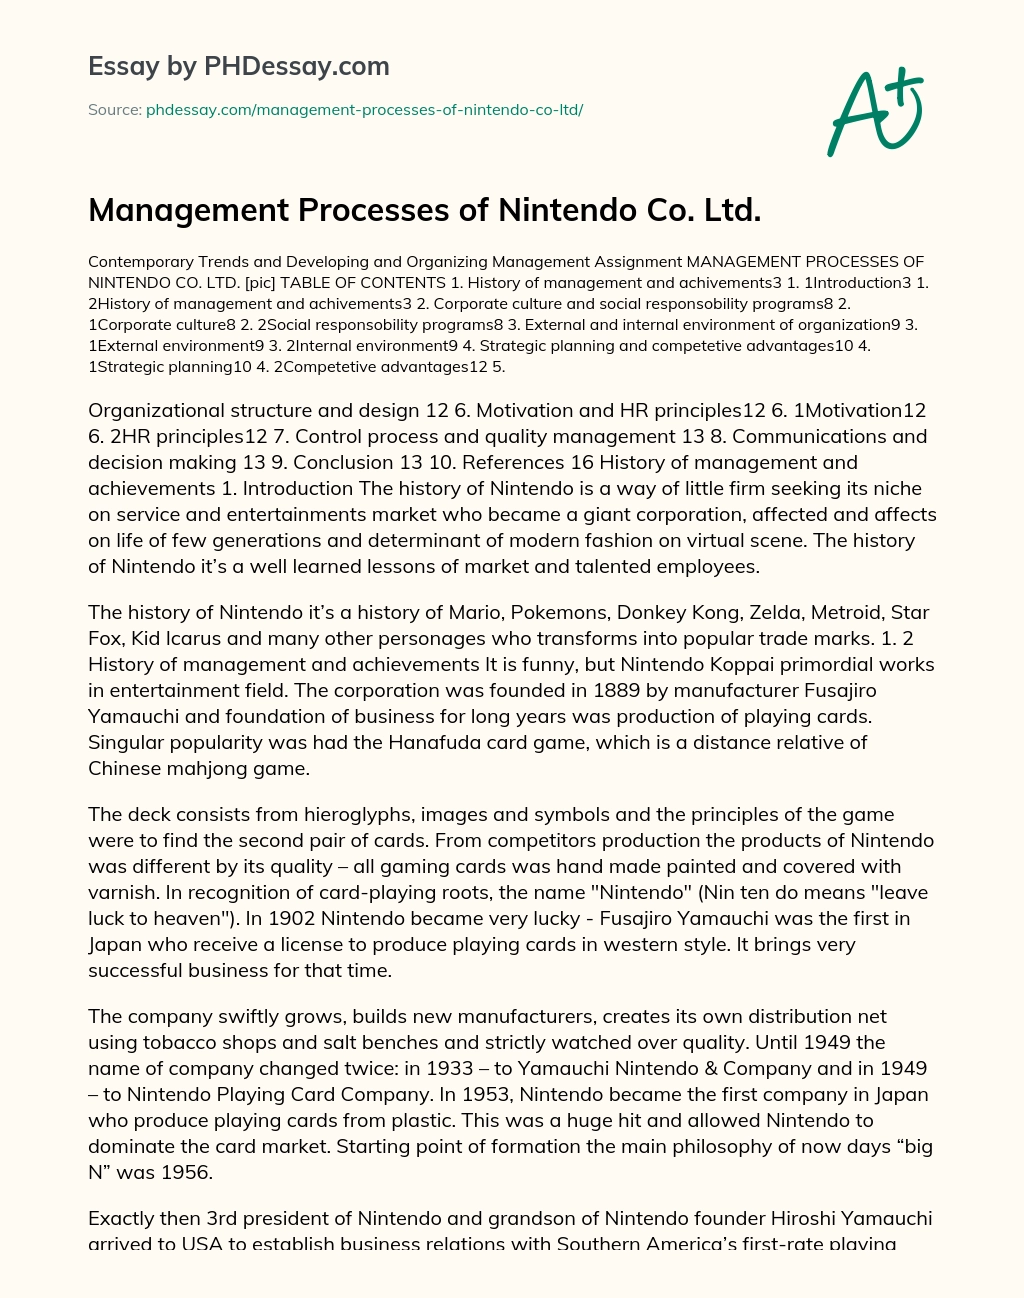 Management Processes of Nintendo Co. Ltd. essay